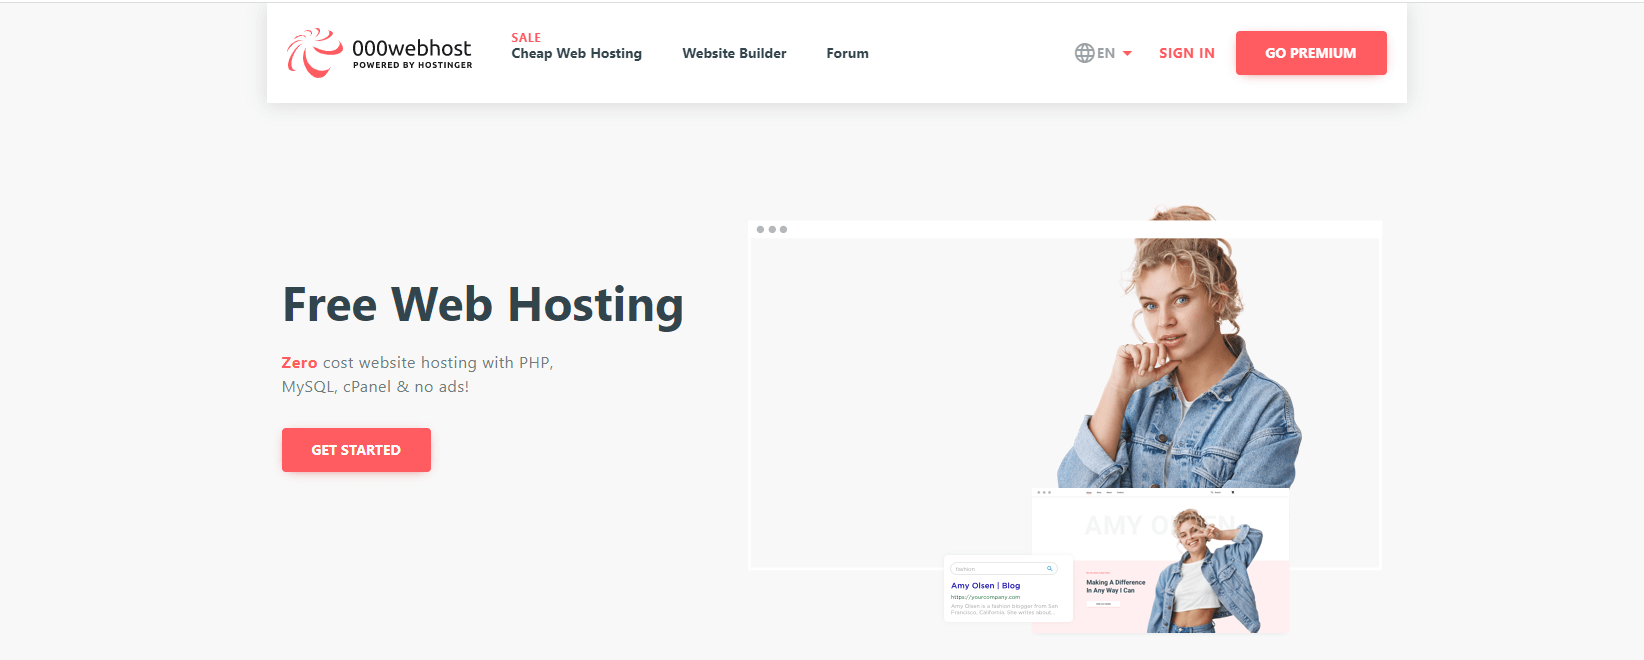 000WebHost website hosting.